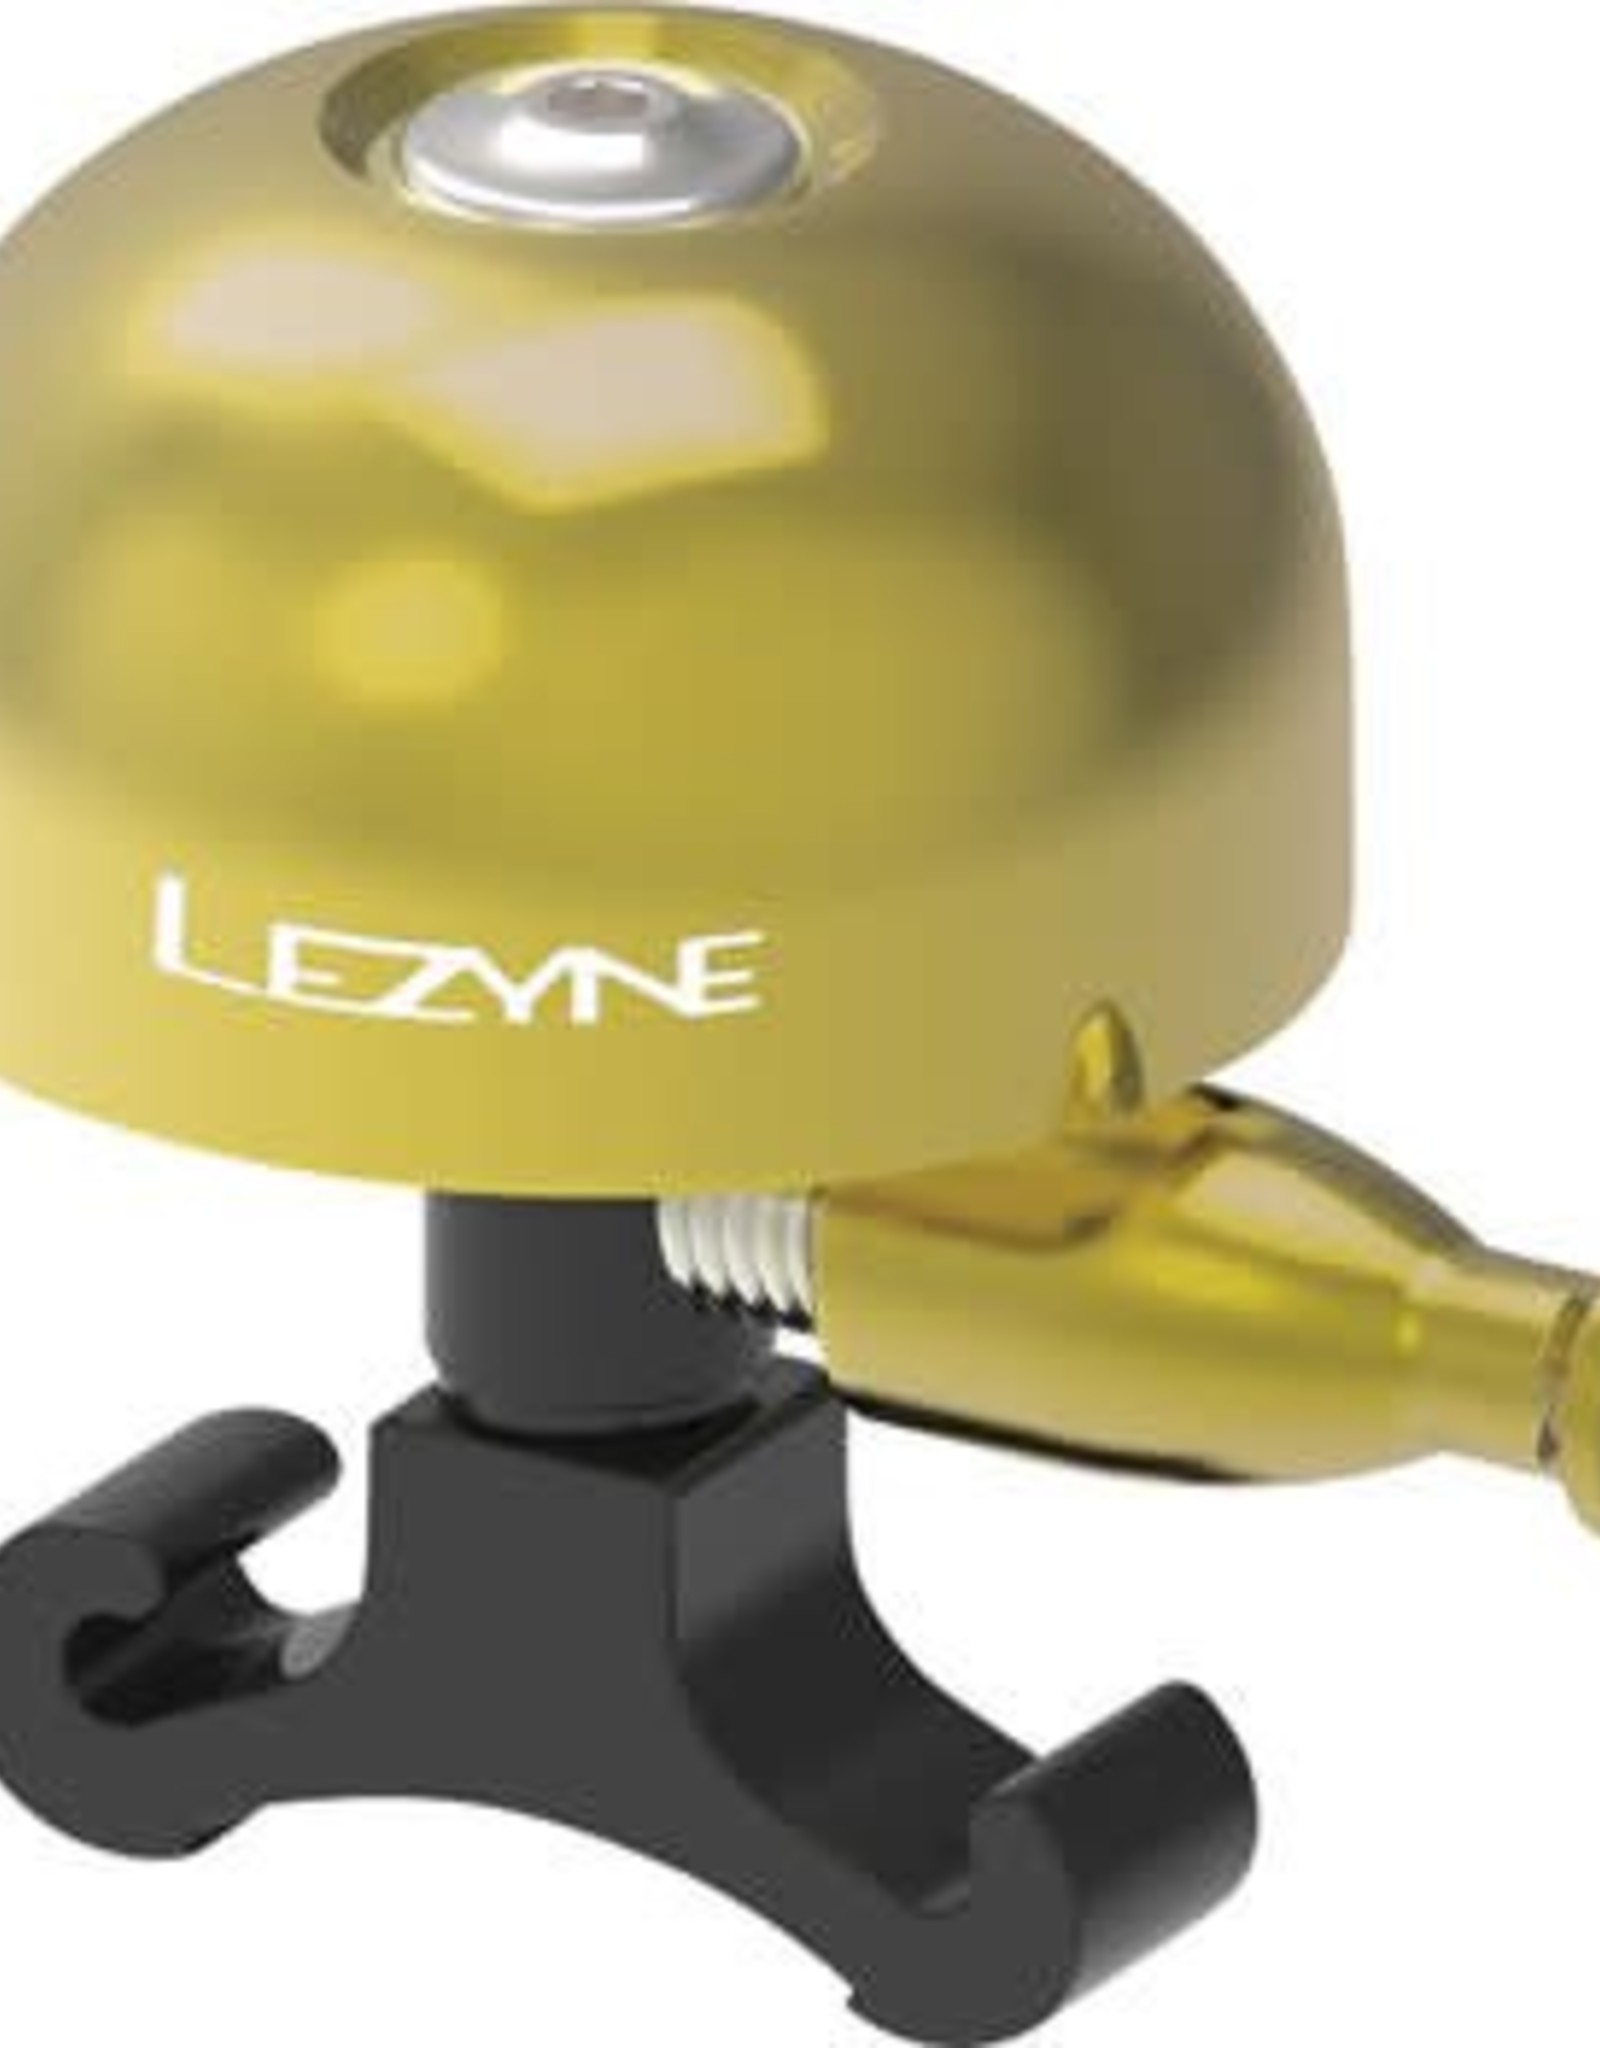 lezyne classic bell